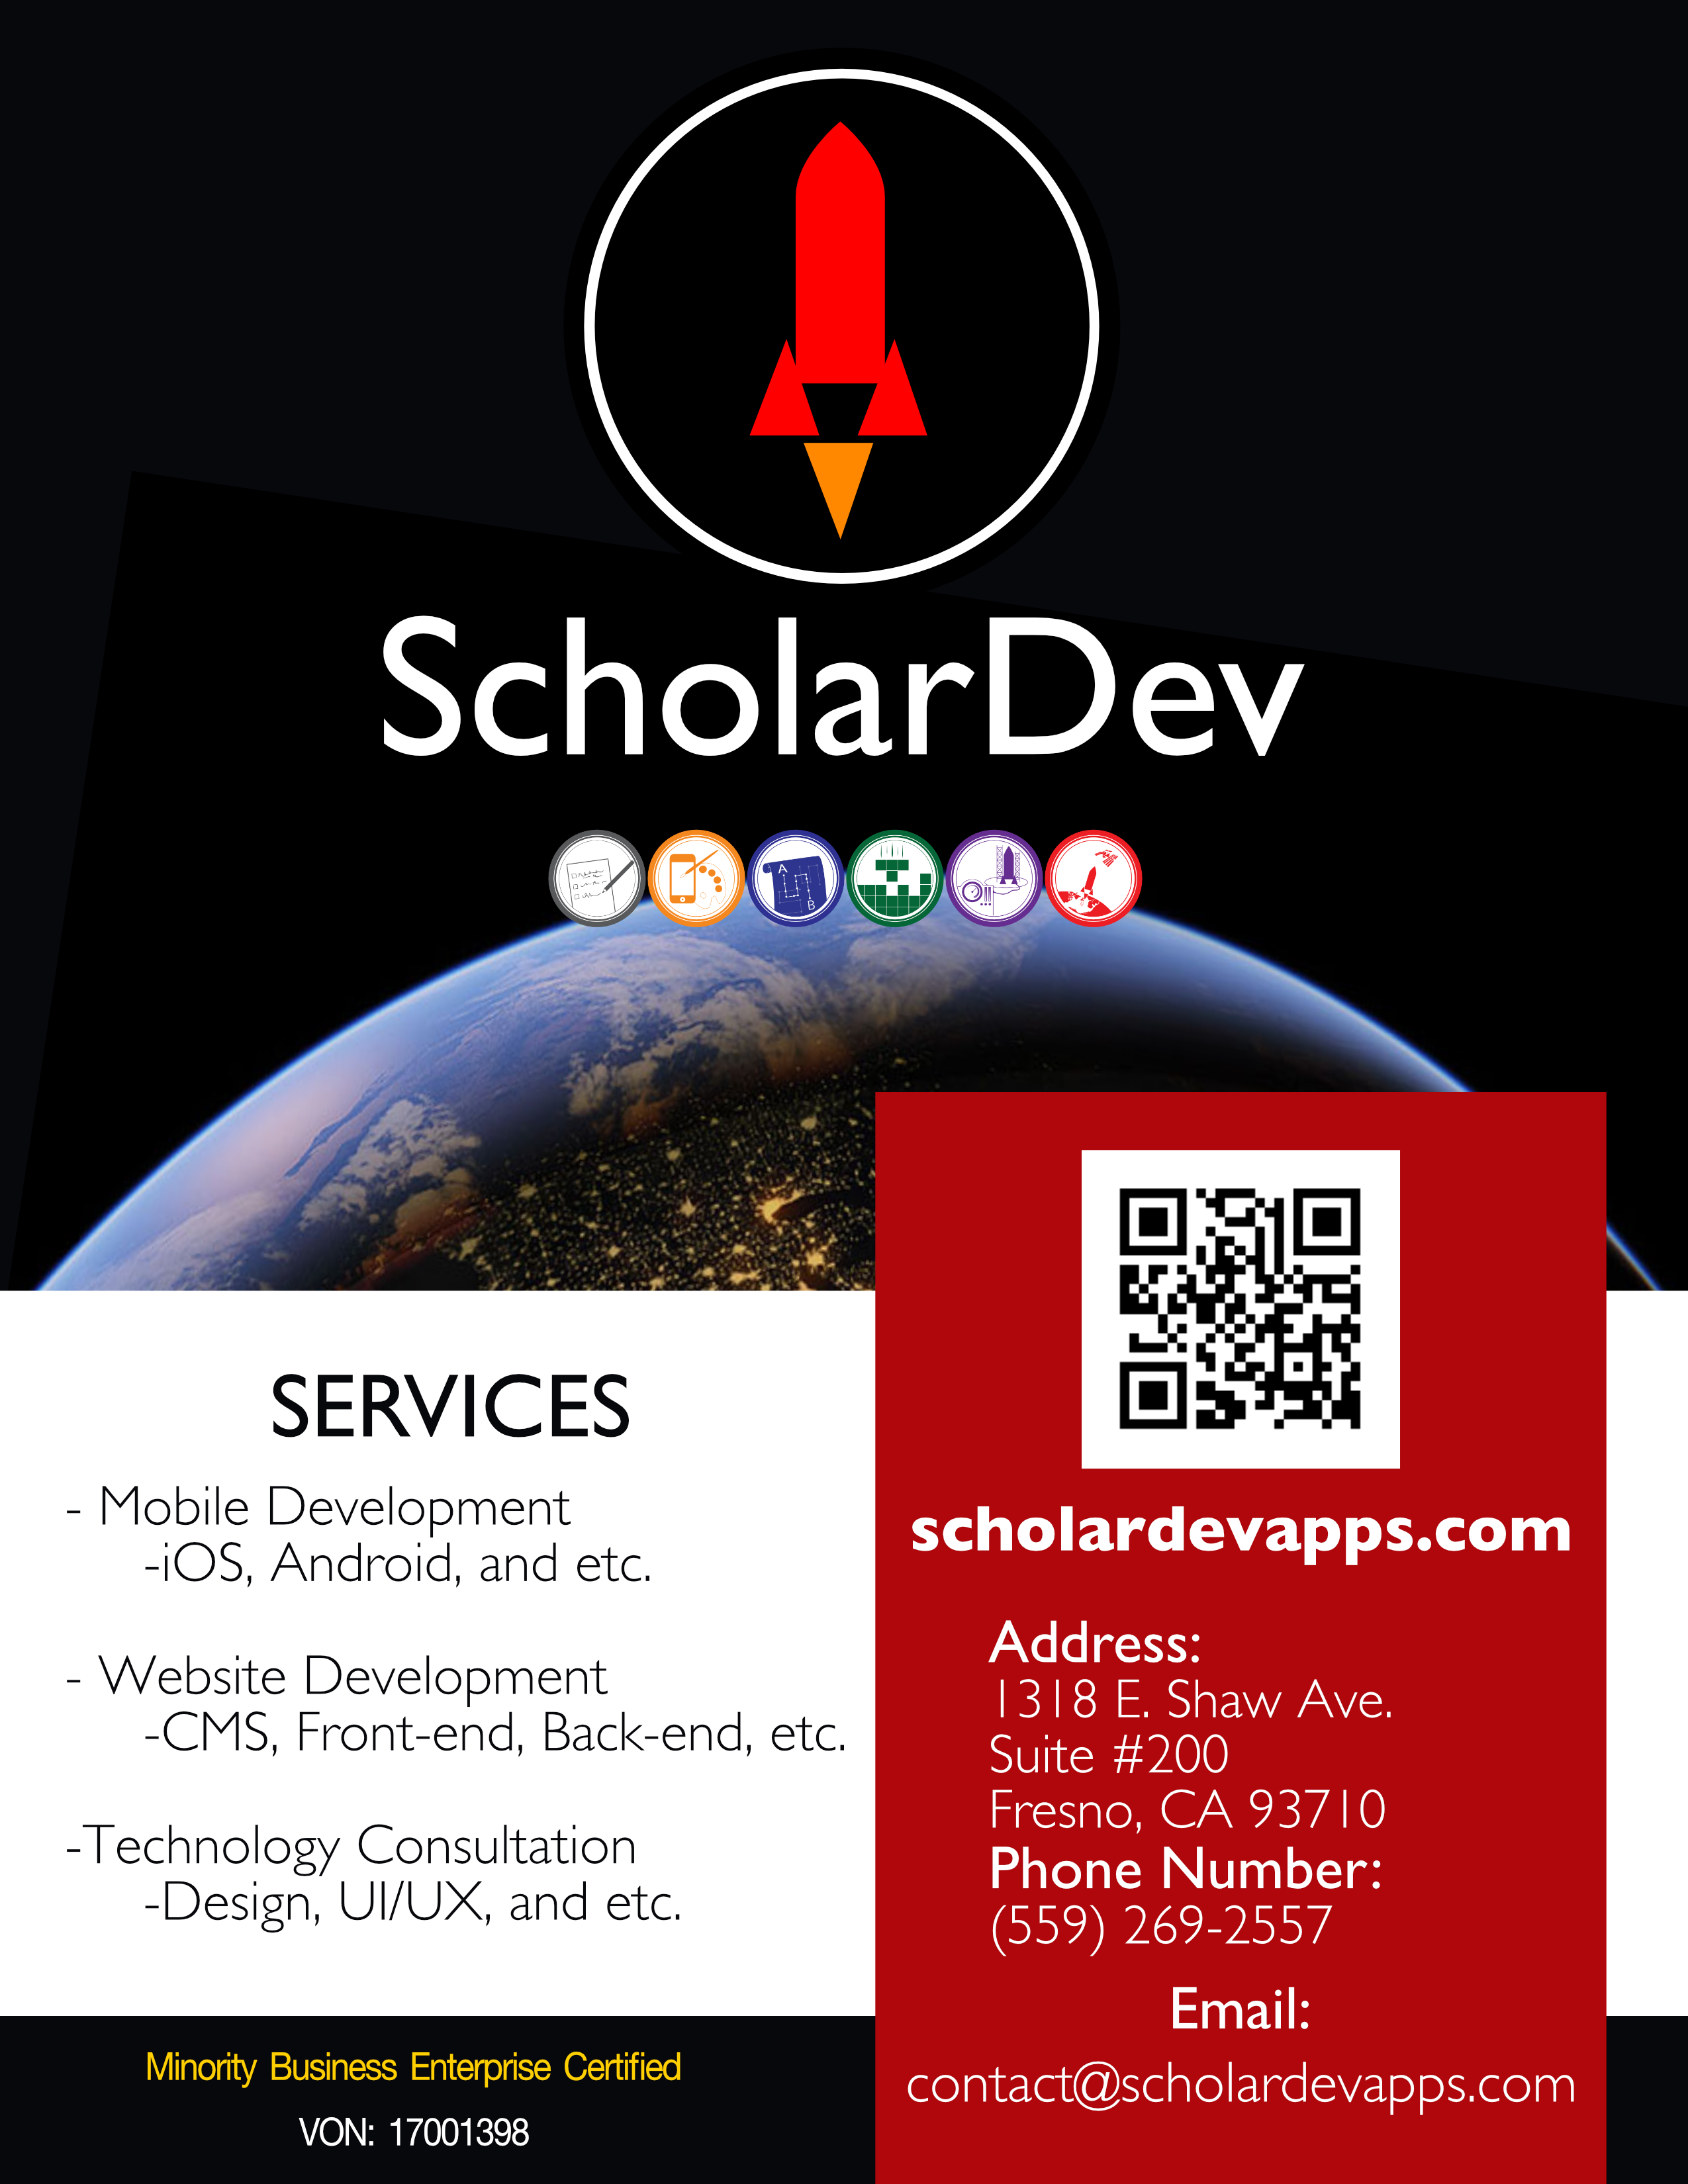 ScholarDev Flyer Example One